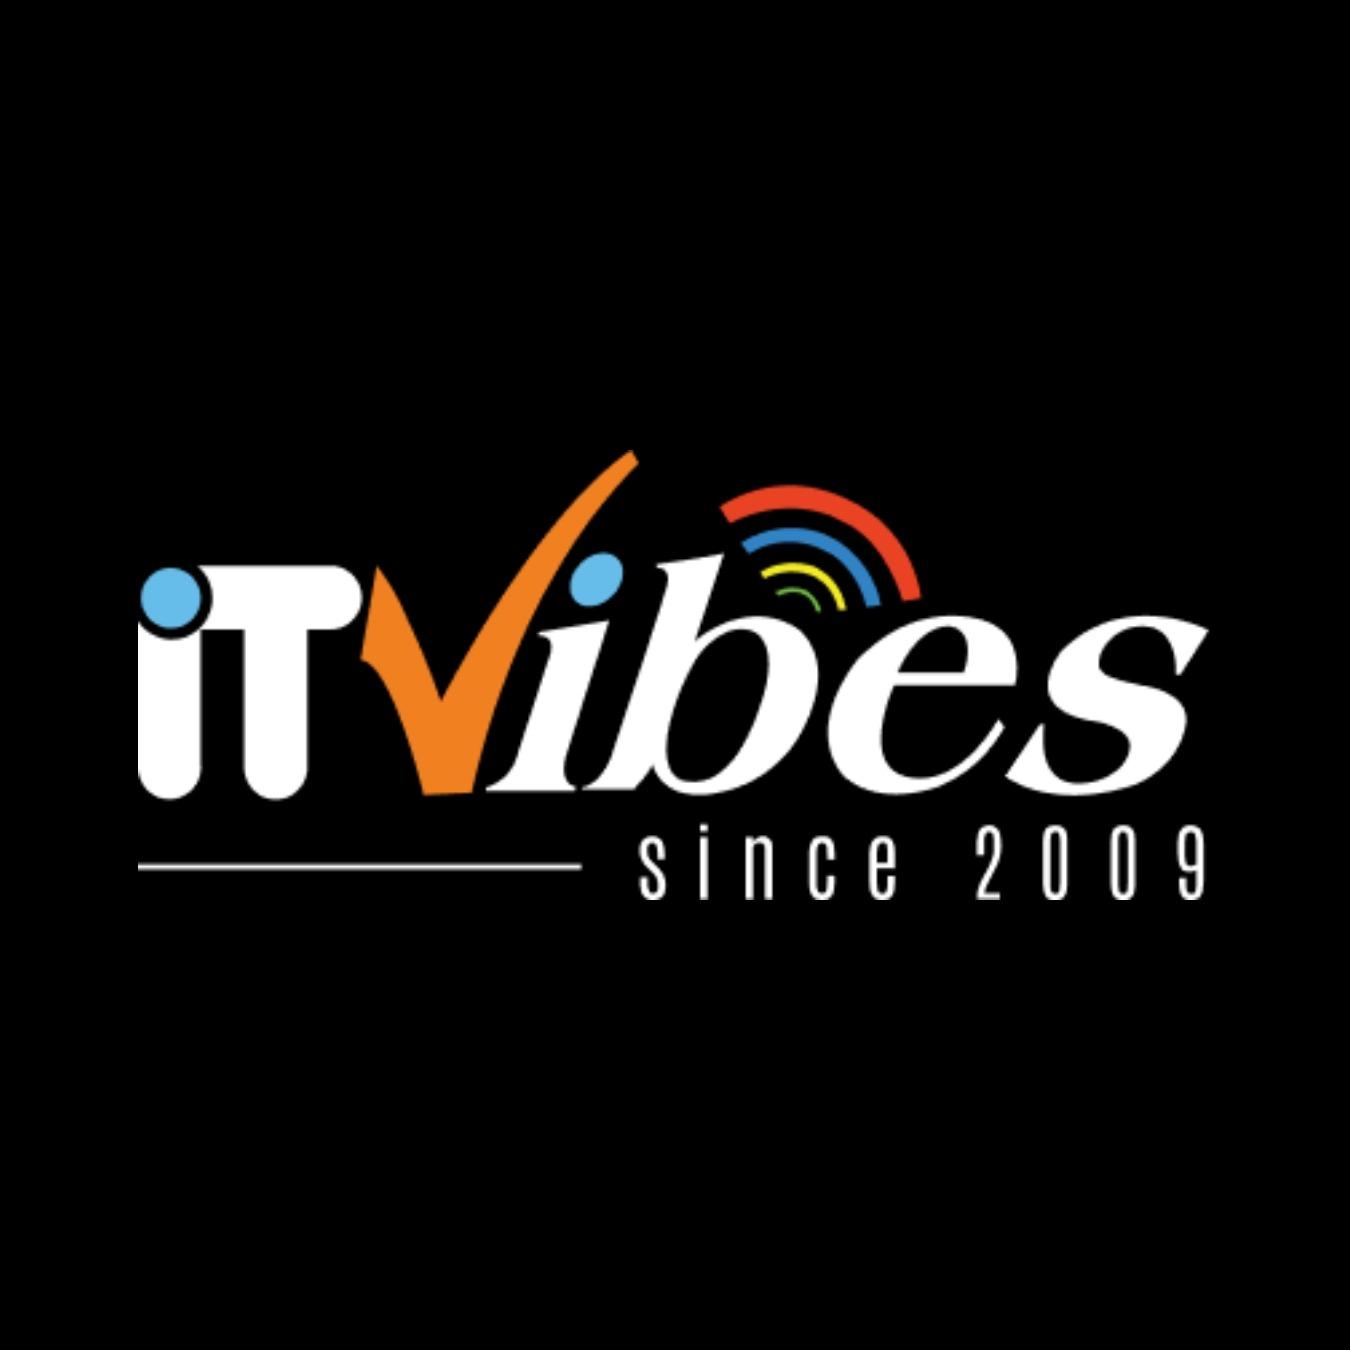 ITVibes - Digital Marketing Agency